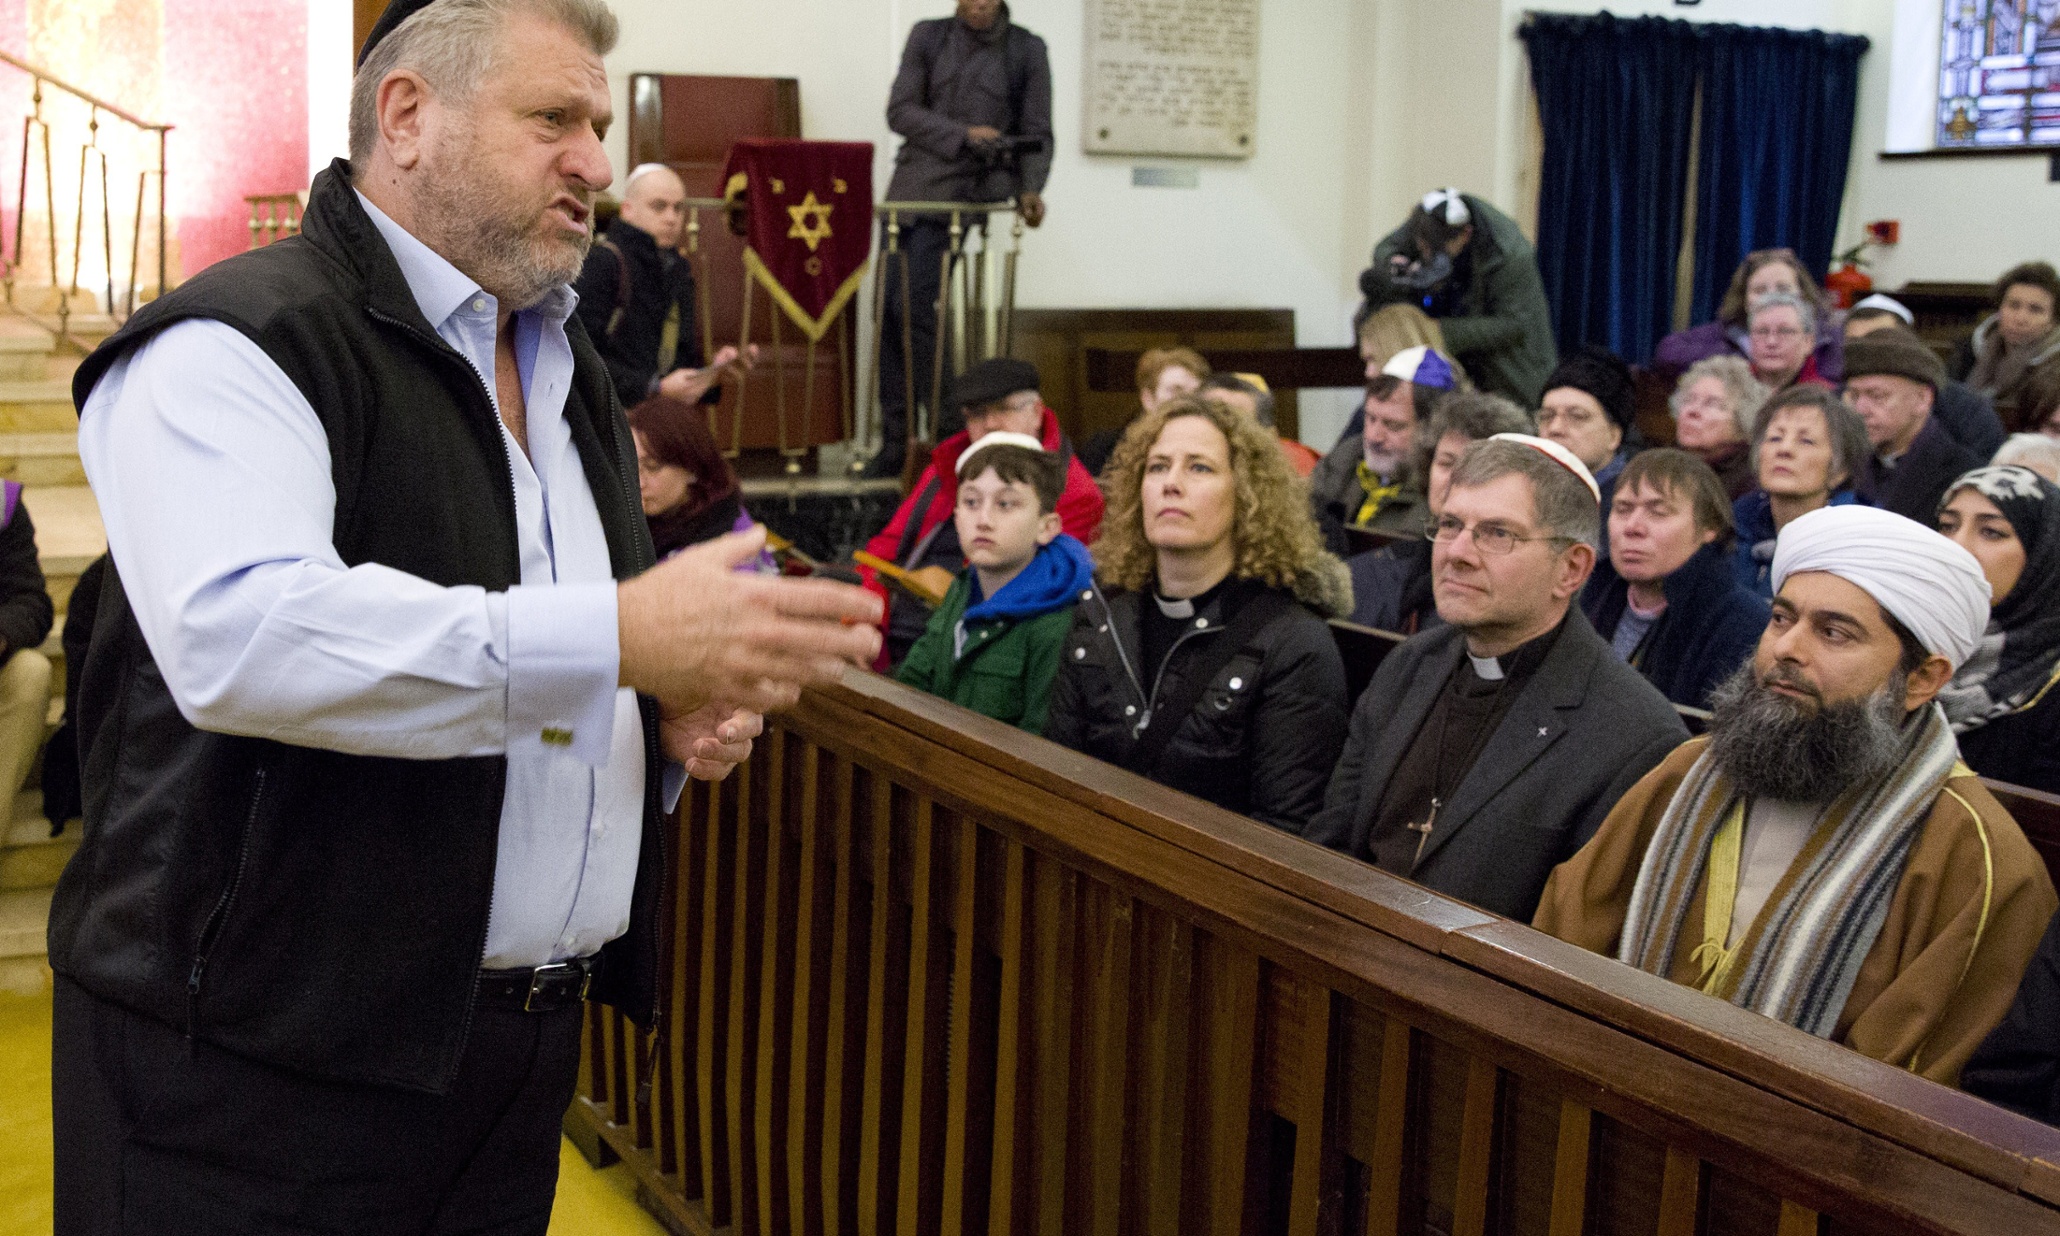 Rabbi Credited With Helping John Galliano Make Amends With Jewish